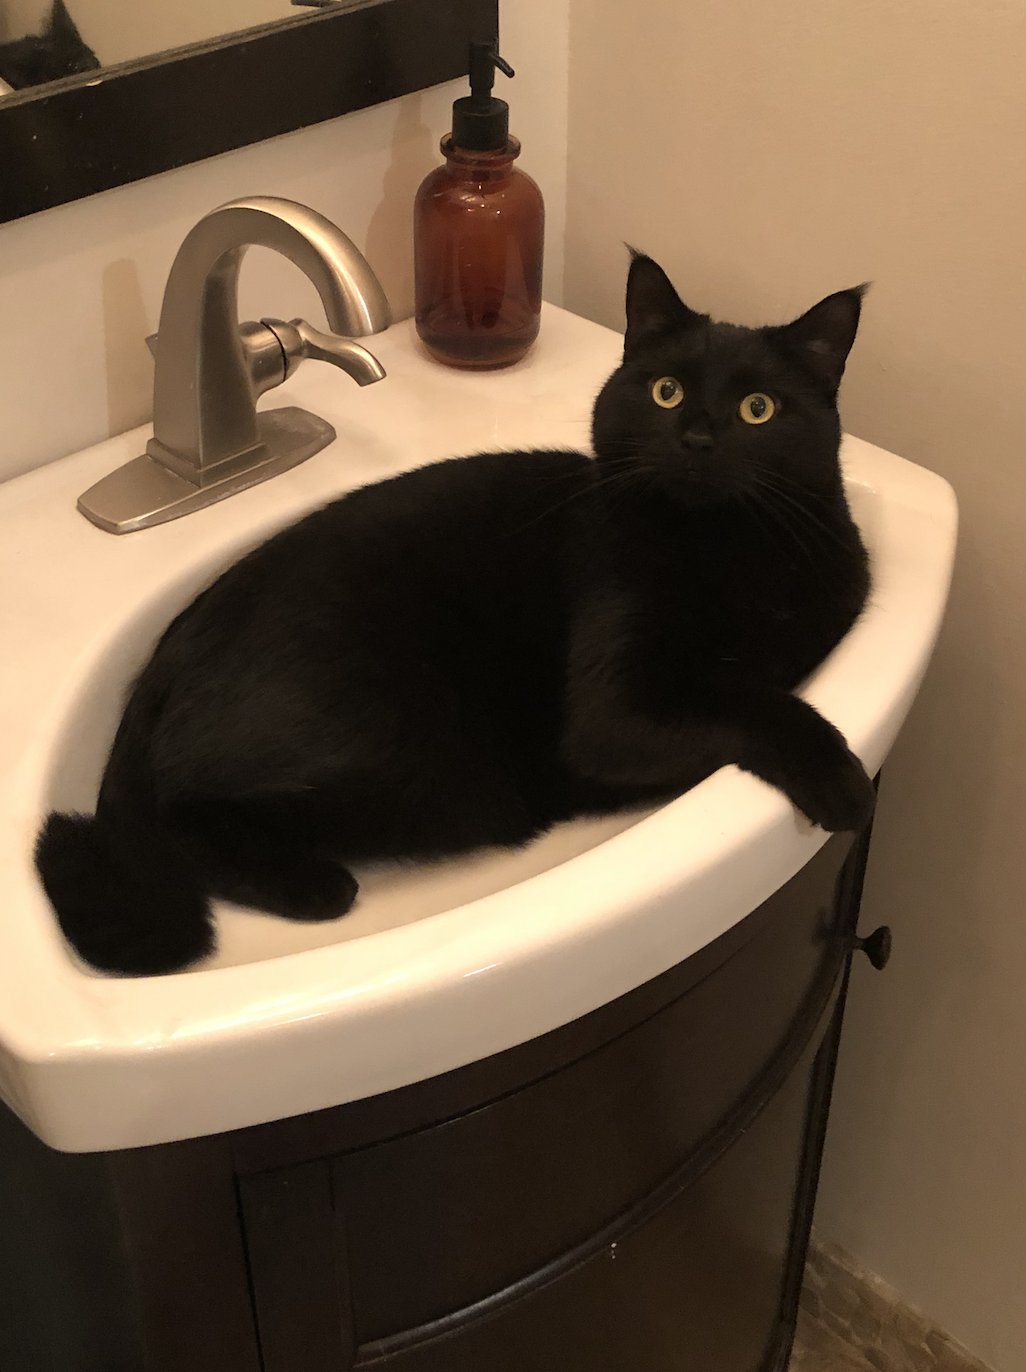 A black cat sits in a bathroom sink.